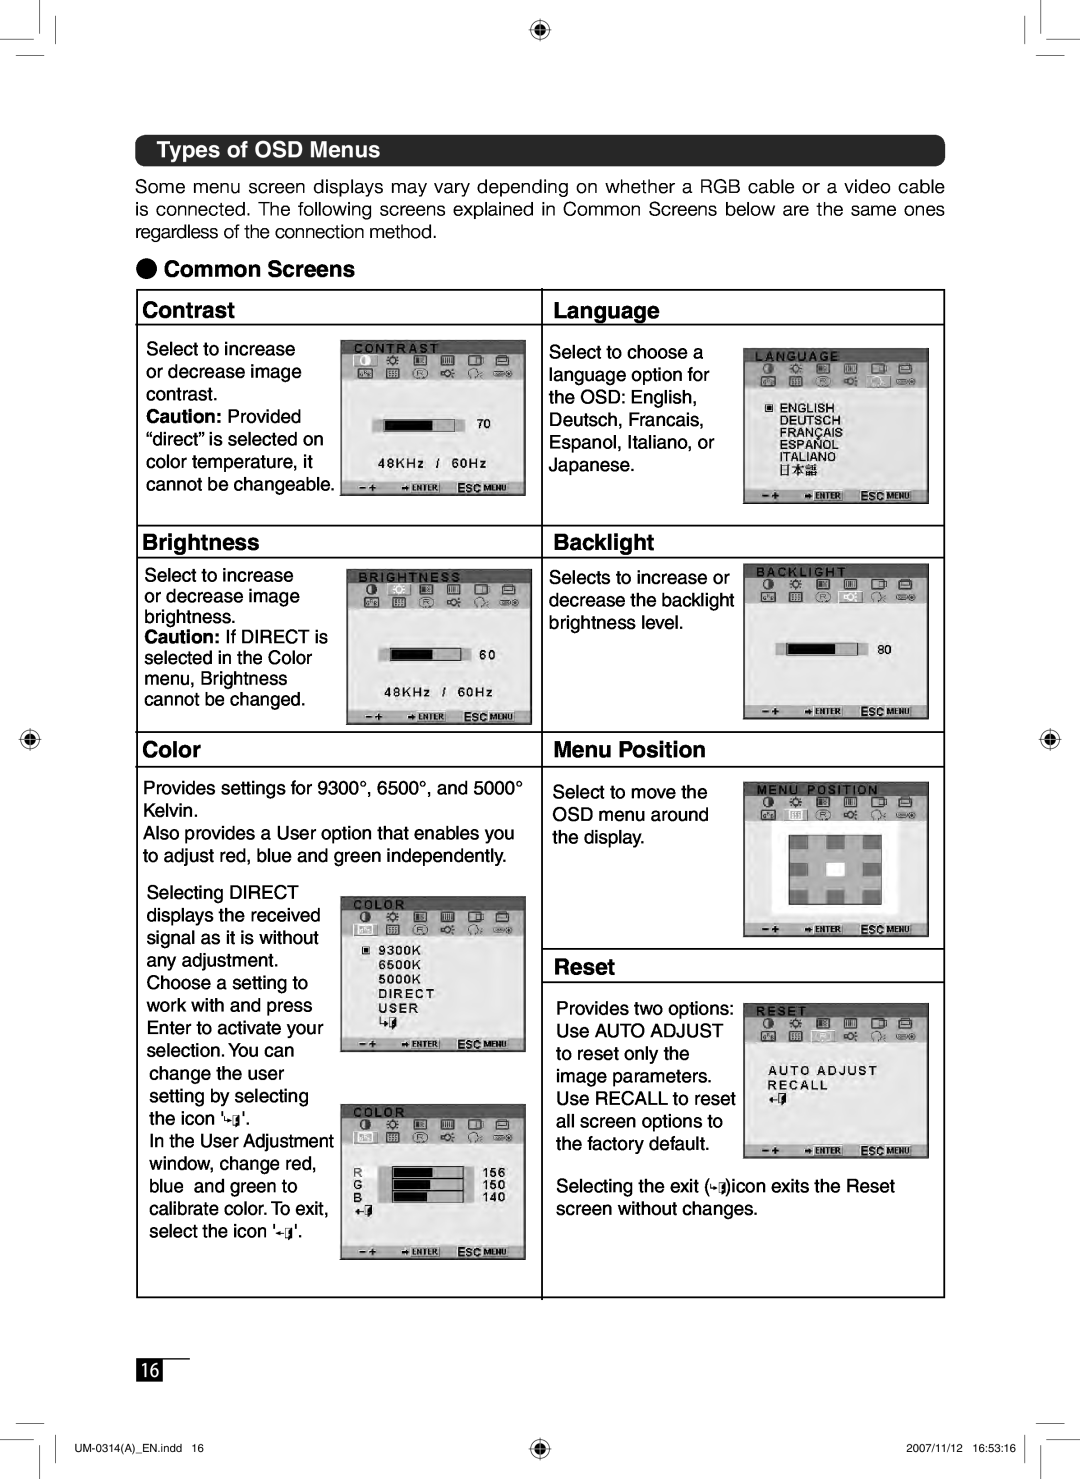 Wacom DTI-520 Types of OSD Menus, Common Screens, Contrast, Language, Brightness, Backlight, Color, Menu Position, Reset 